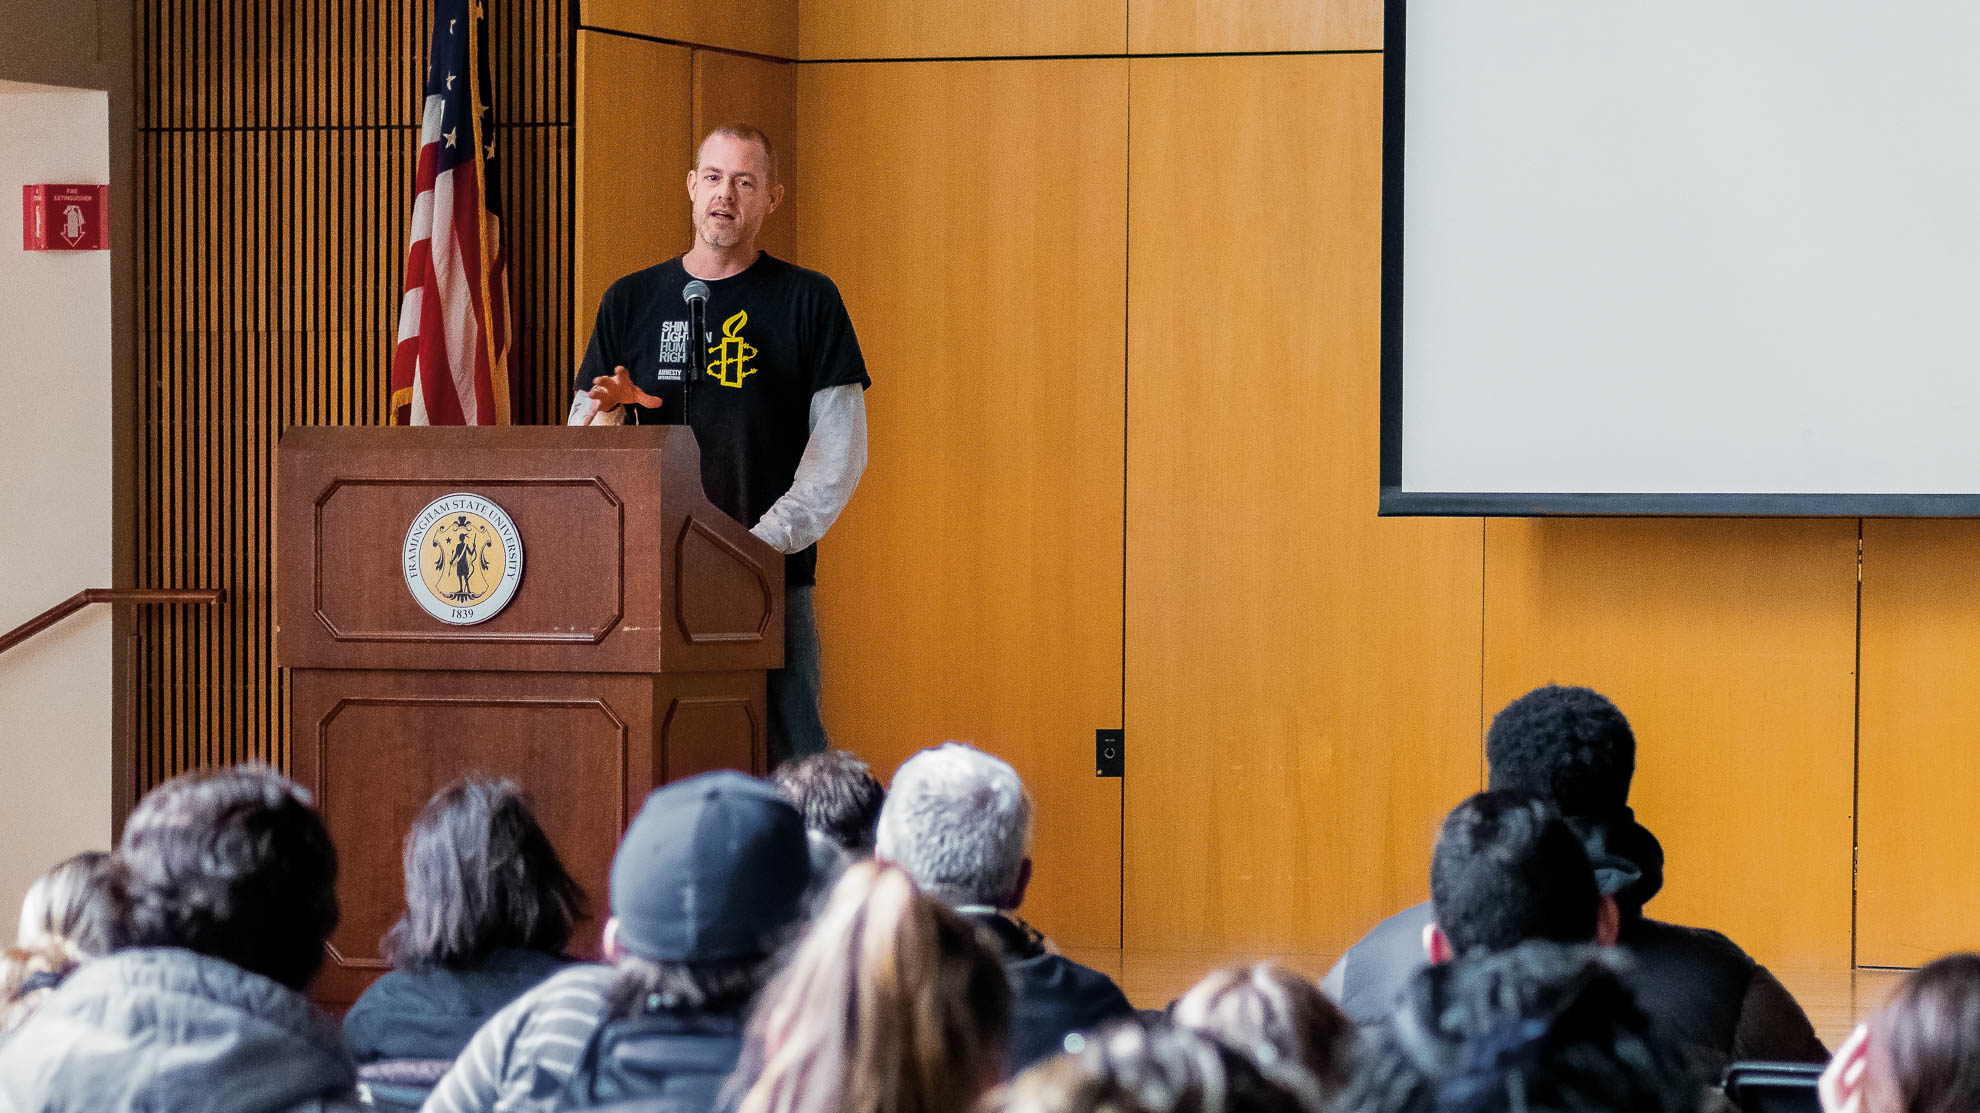 Scott Langley presenting at a university.